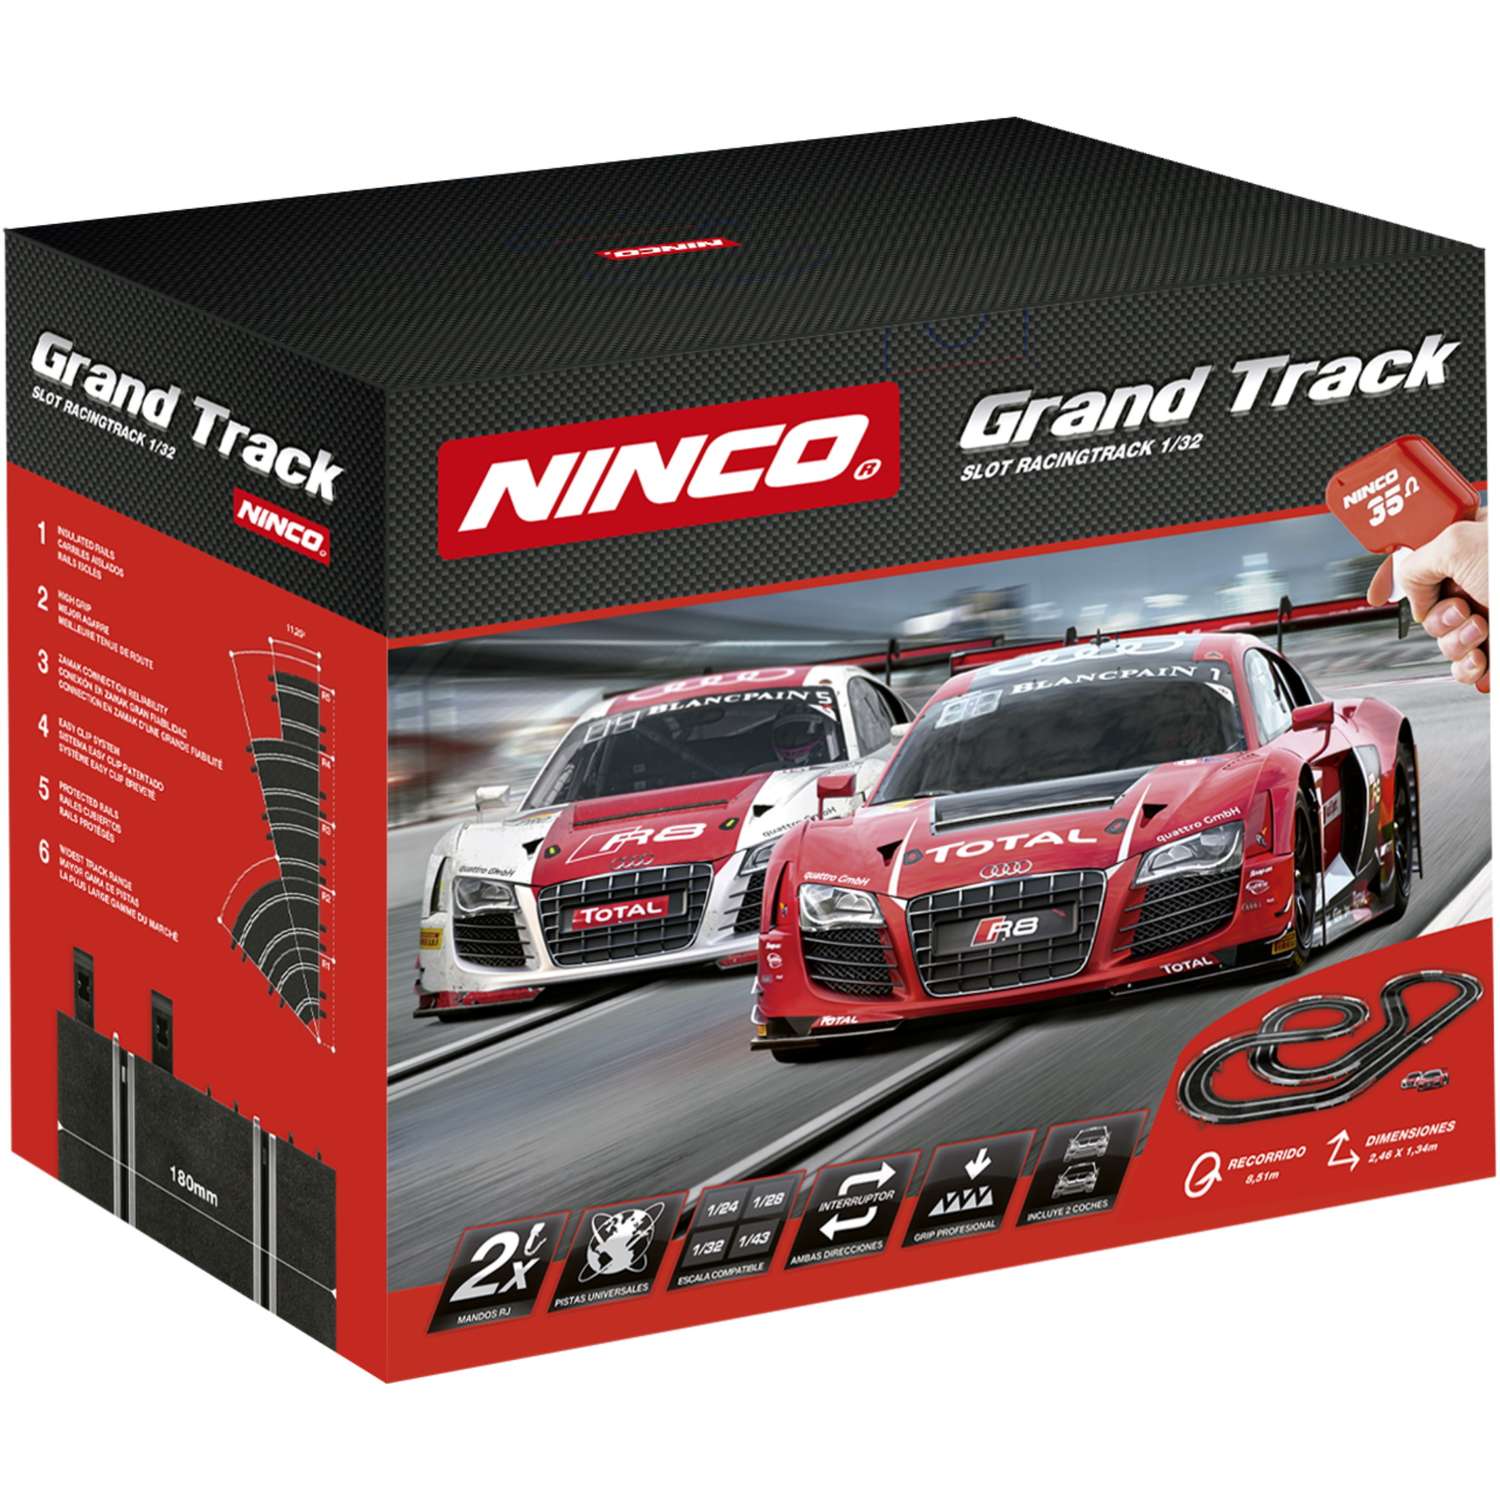 Автотрек Ninco Grand Track 1:32 20194 - фото 2